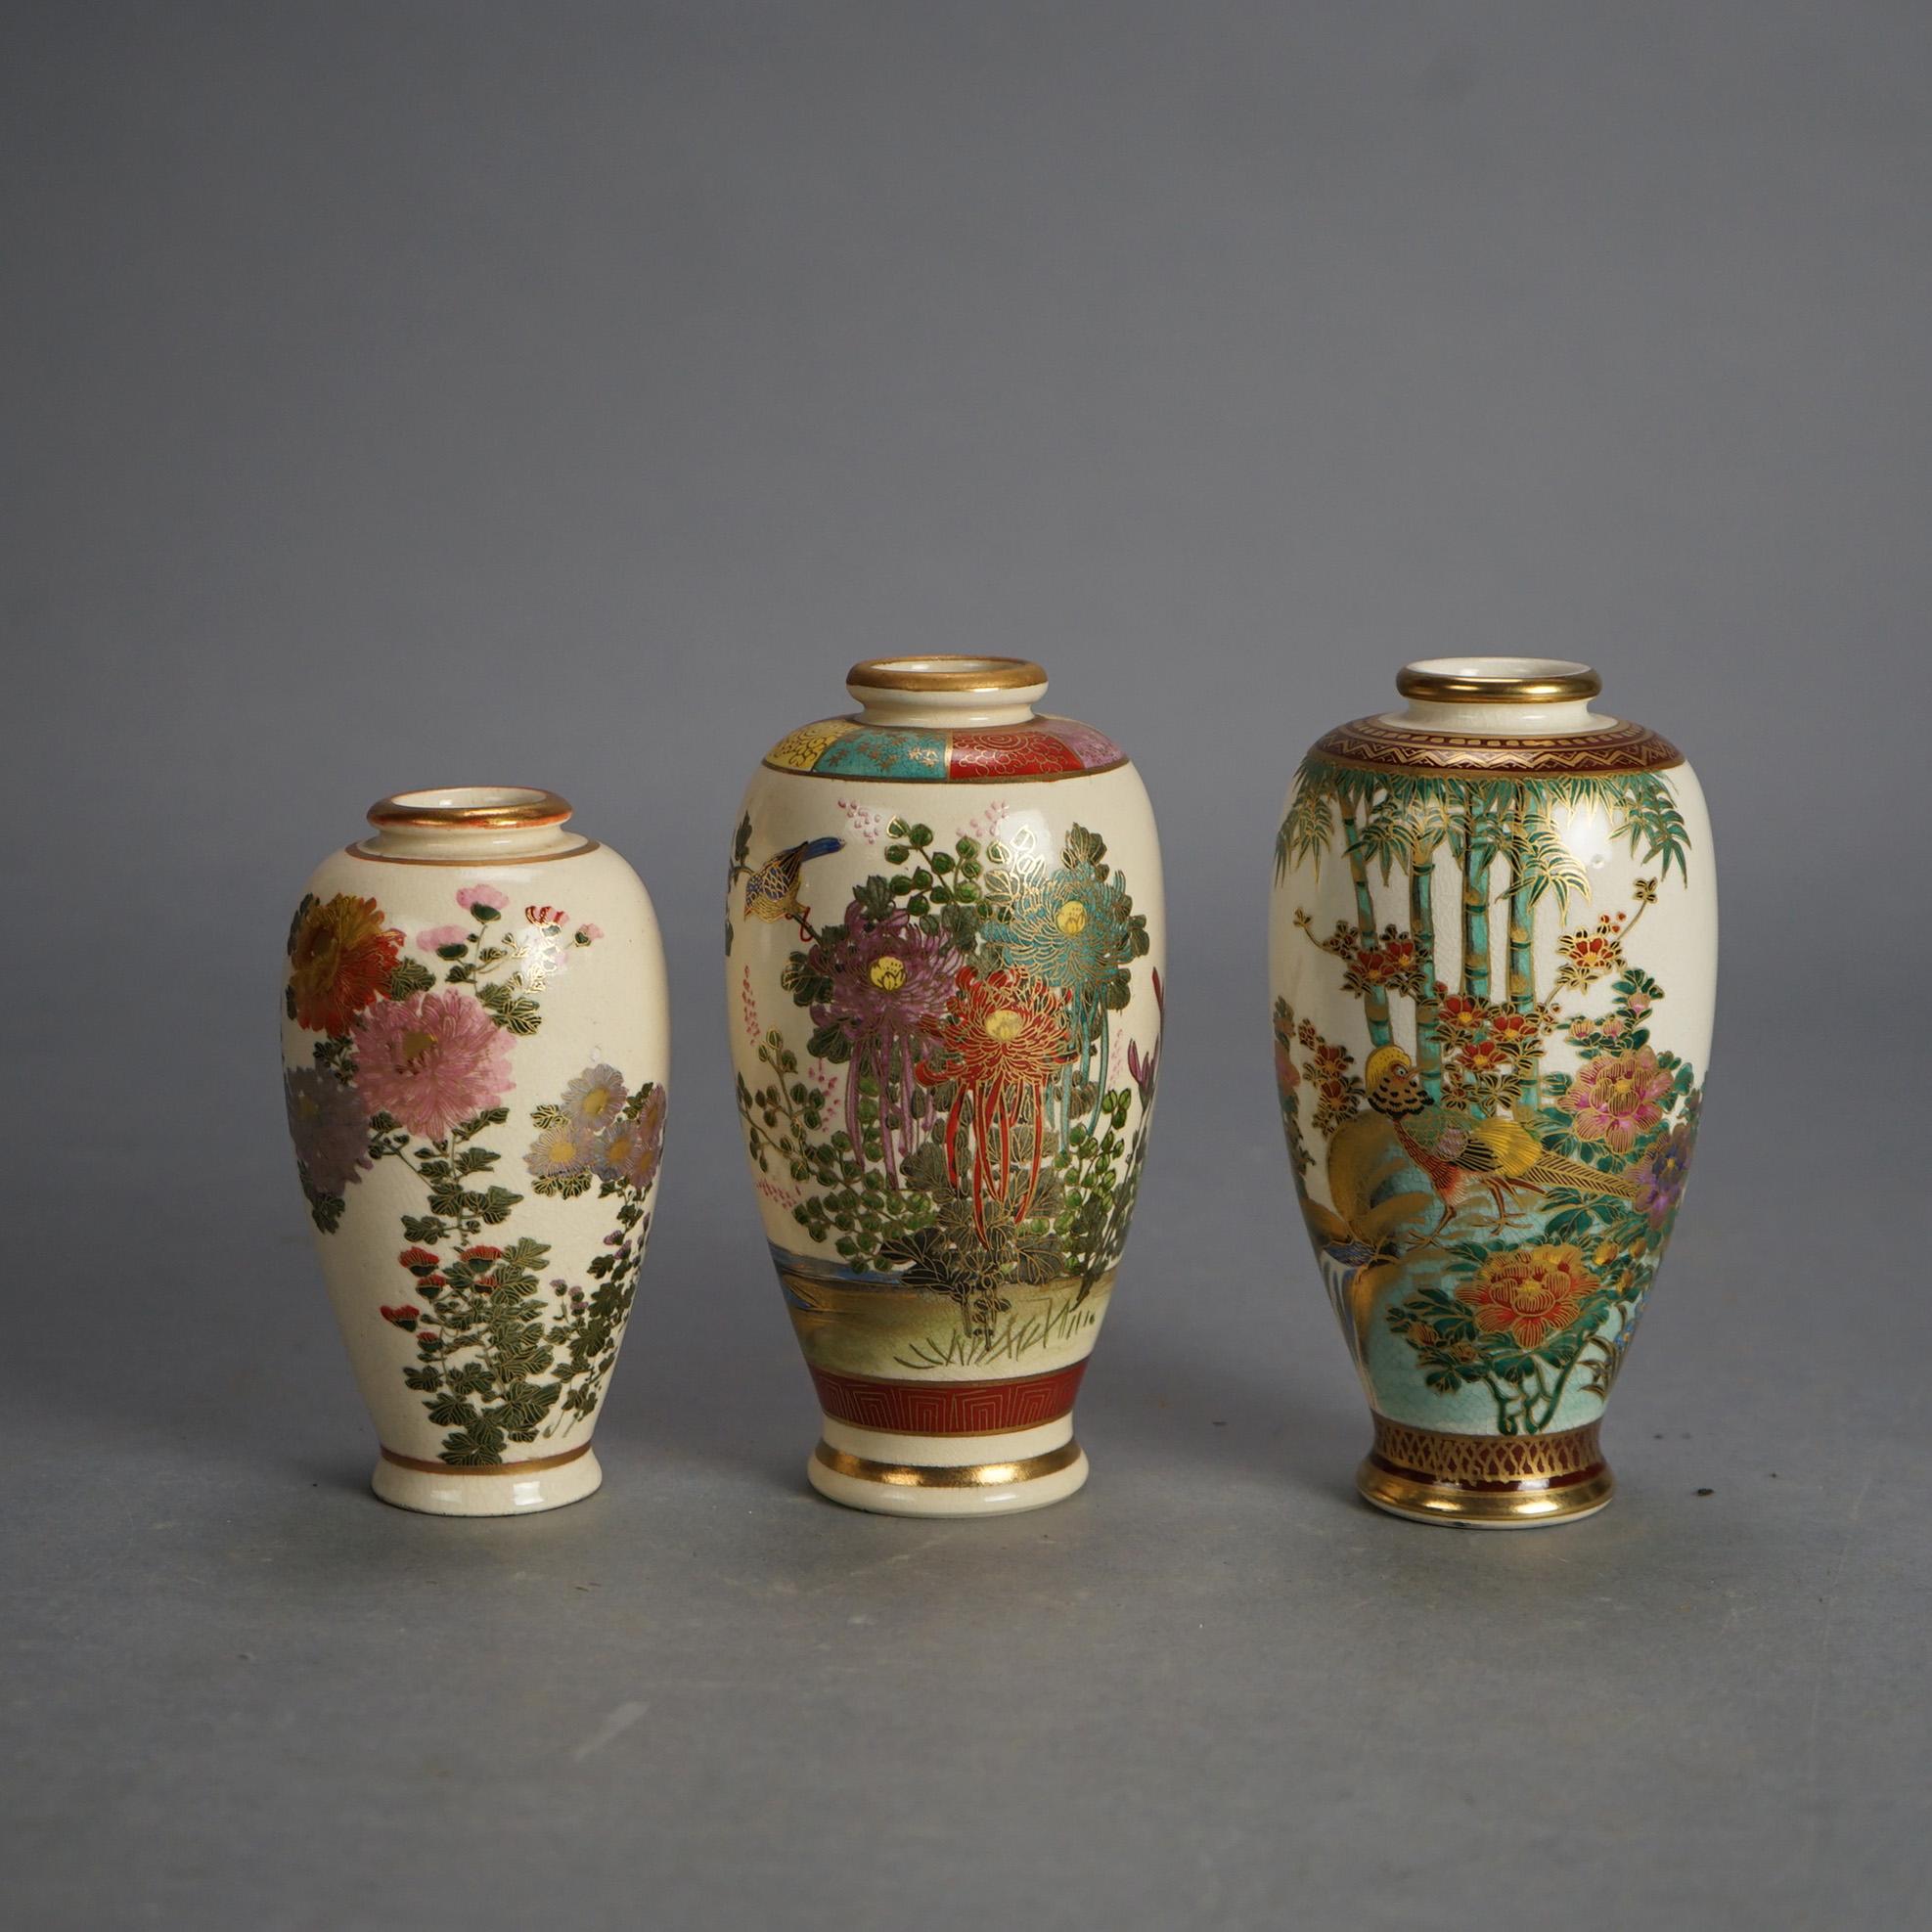 Three Antique Japanese Satsuma Porcelain Vases with Garden Flowers & Gilt C1920

Measures - 3